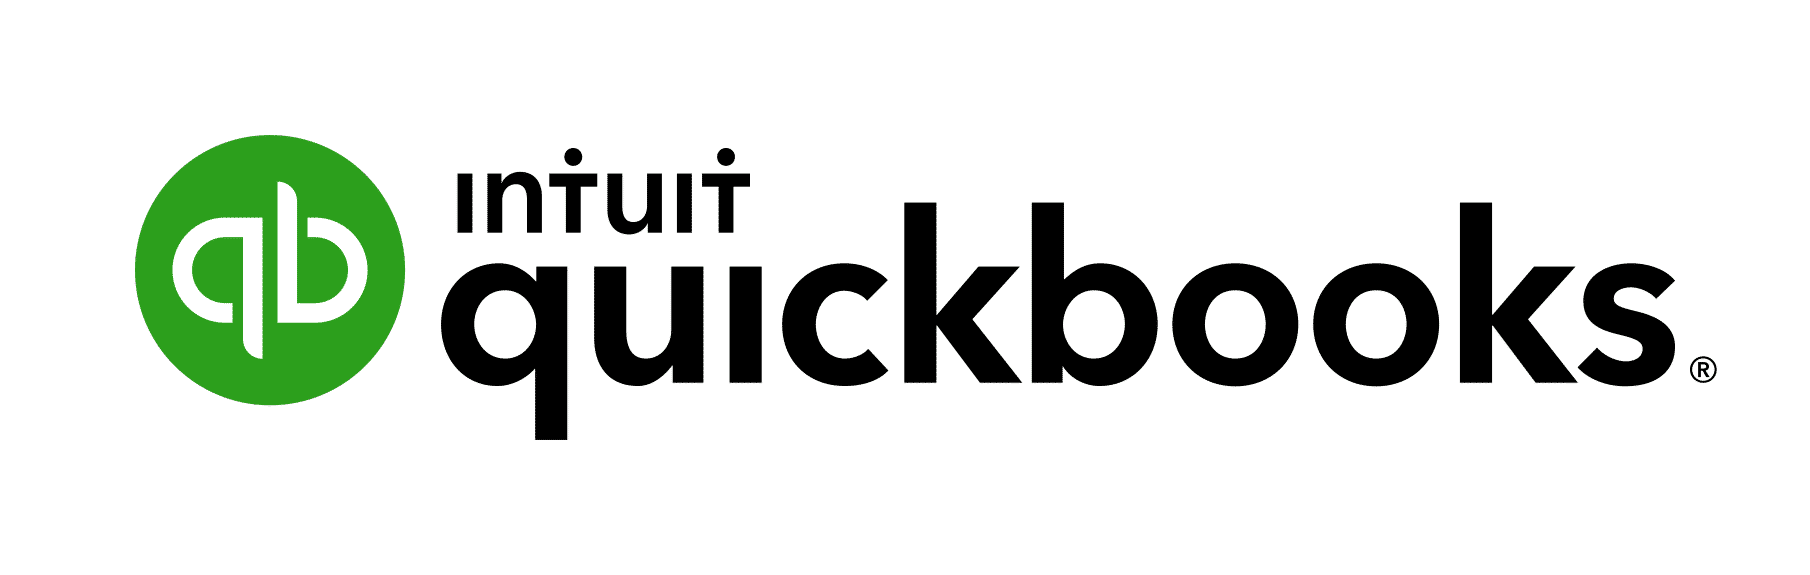 quickbooks logo desktop online